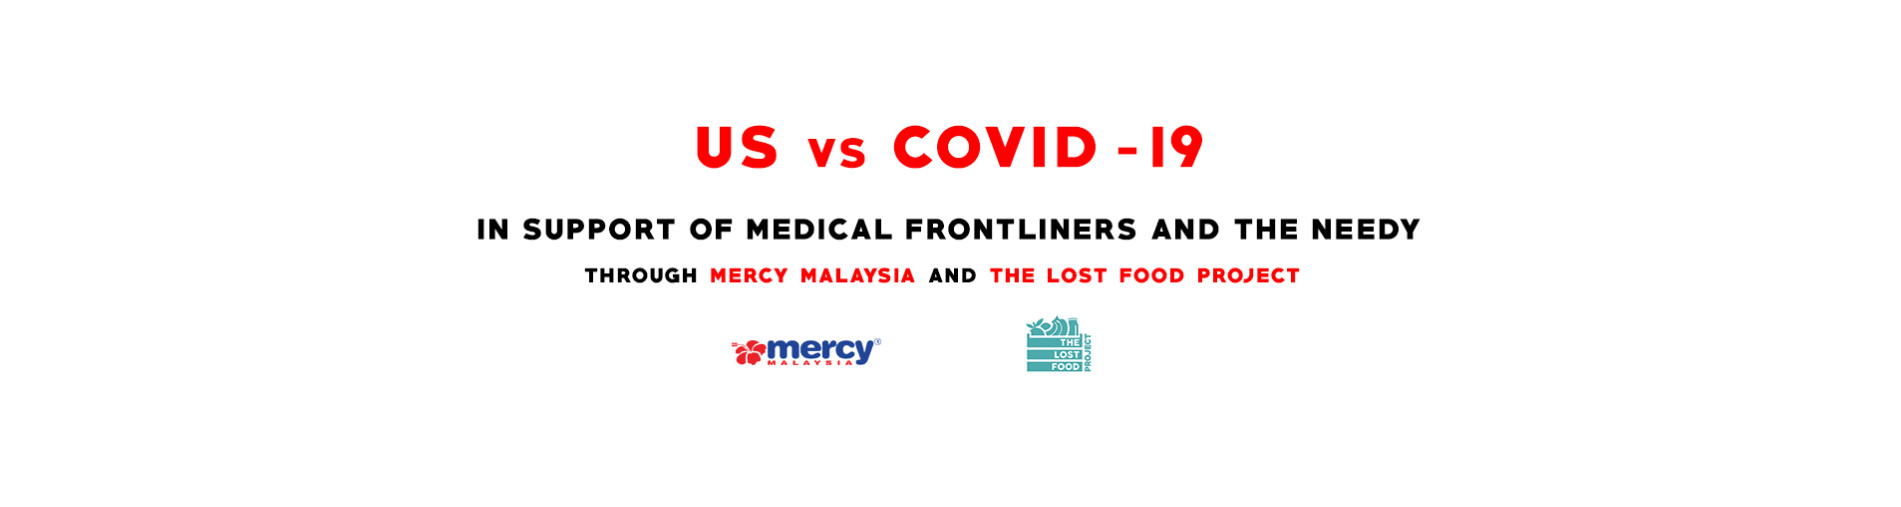 Us vs COVID-19